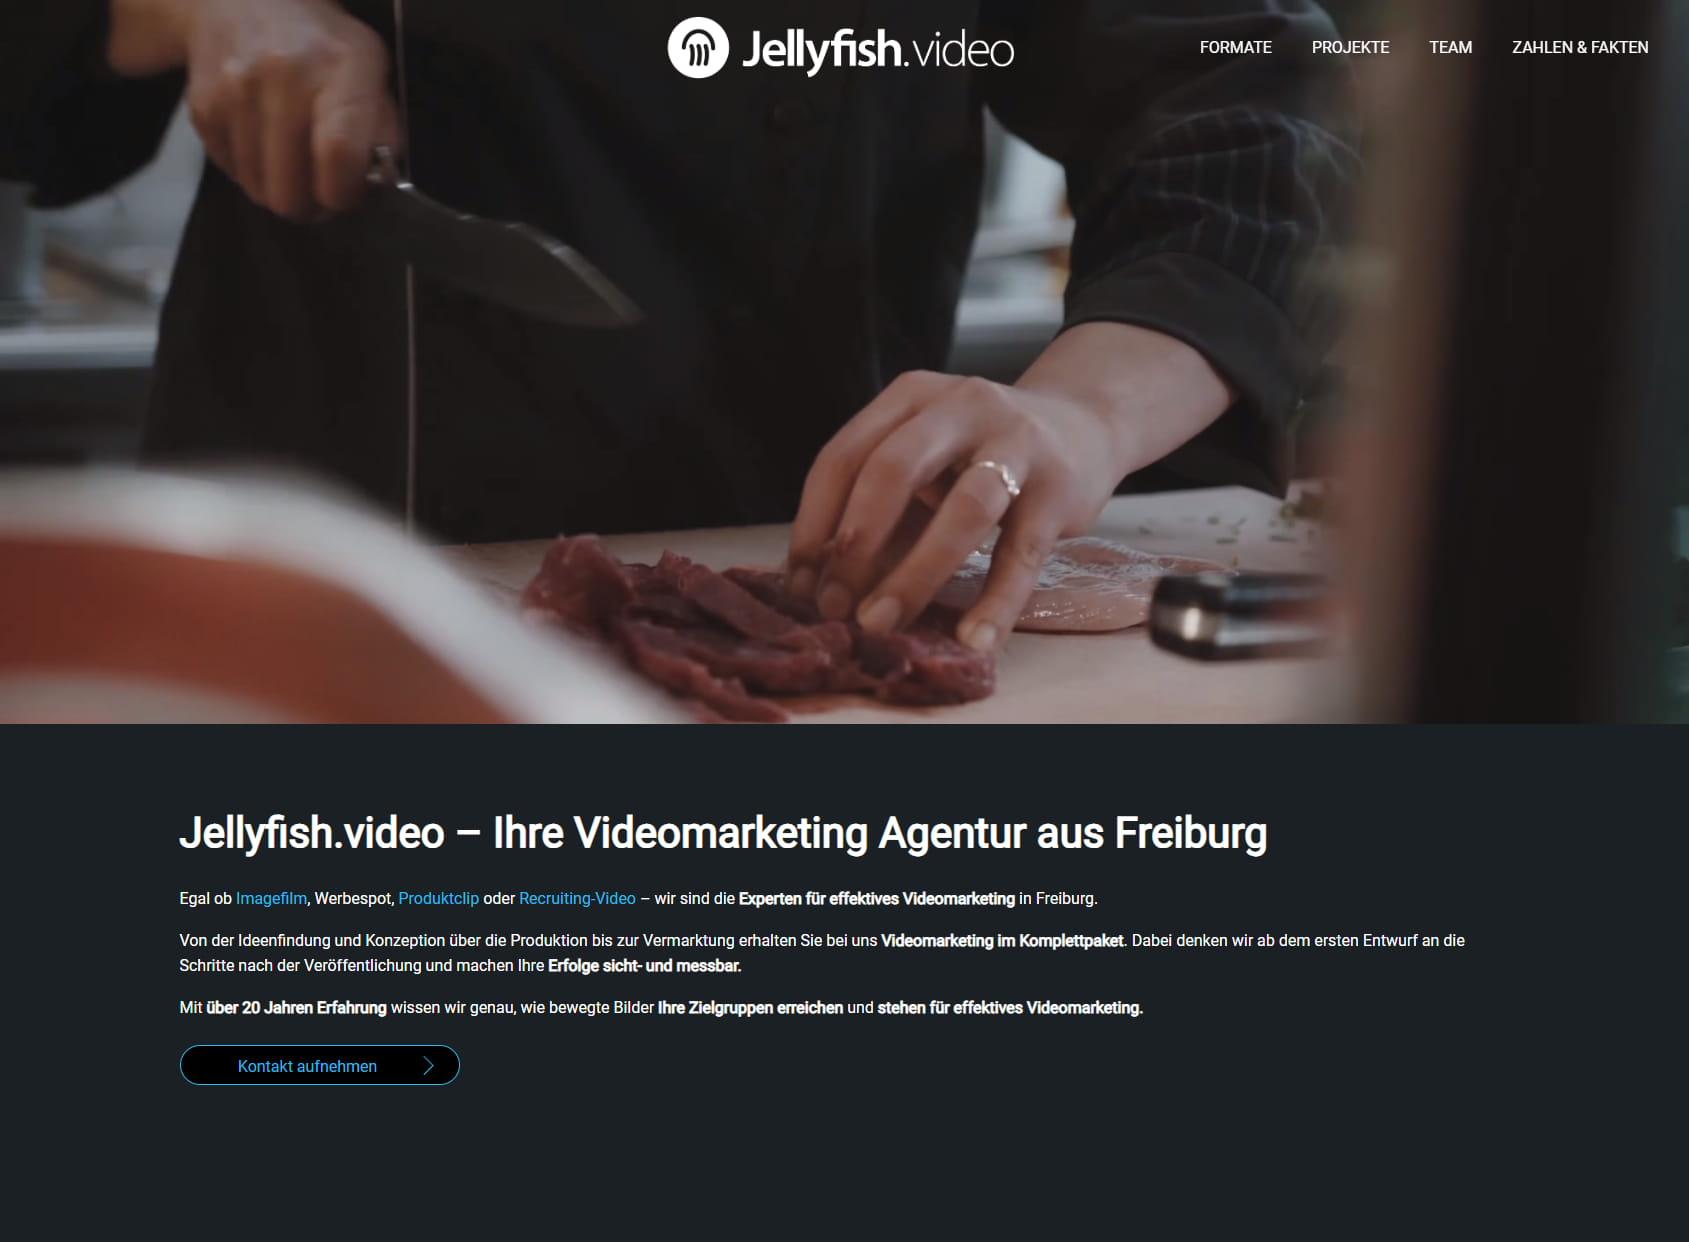 Jellyfish.video Videomarketing Agentur